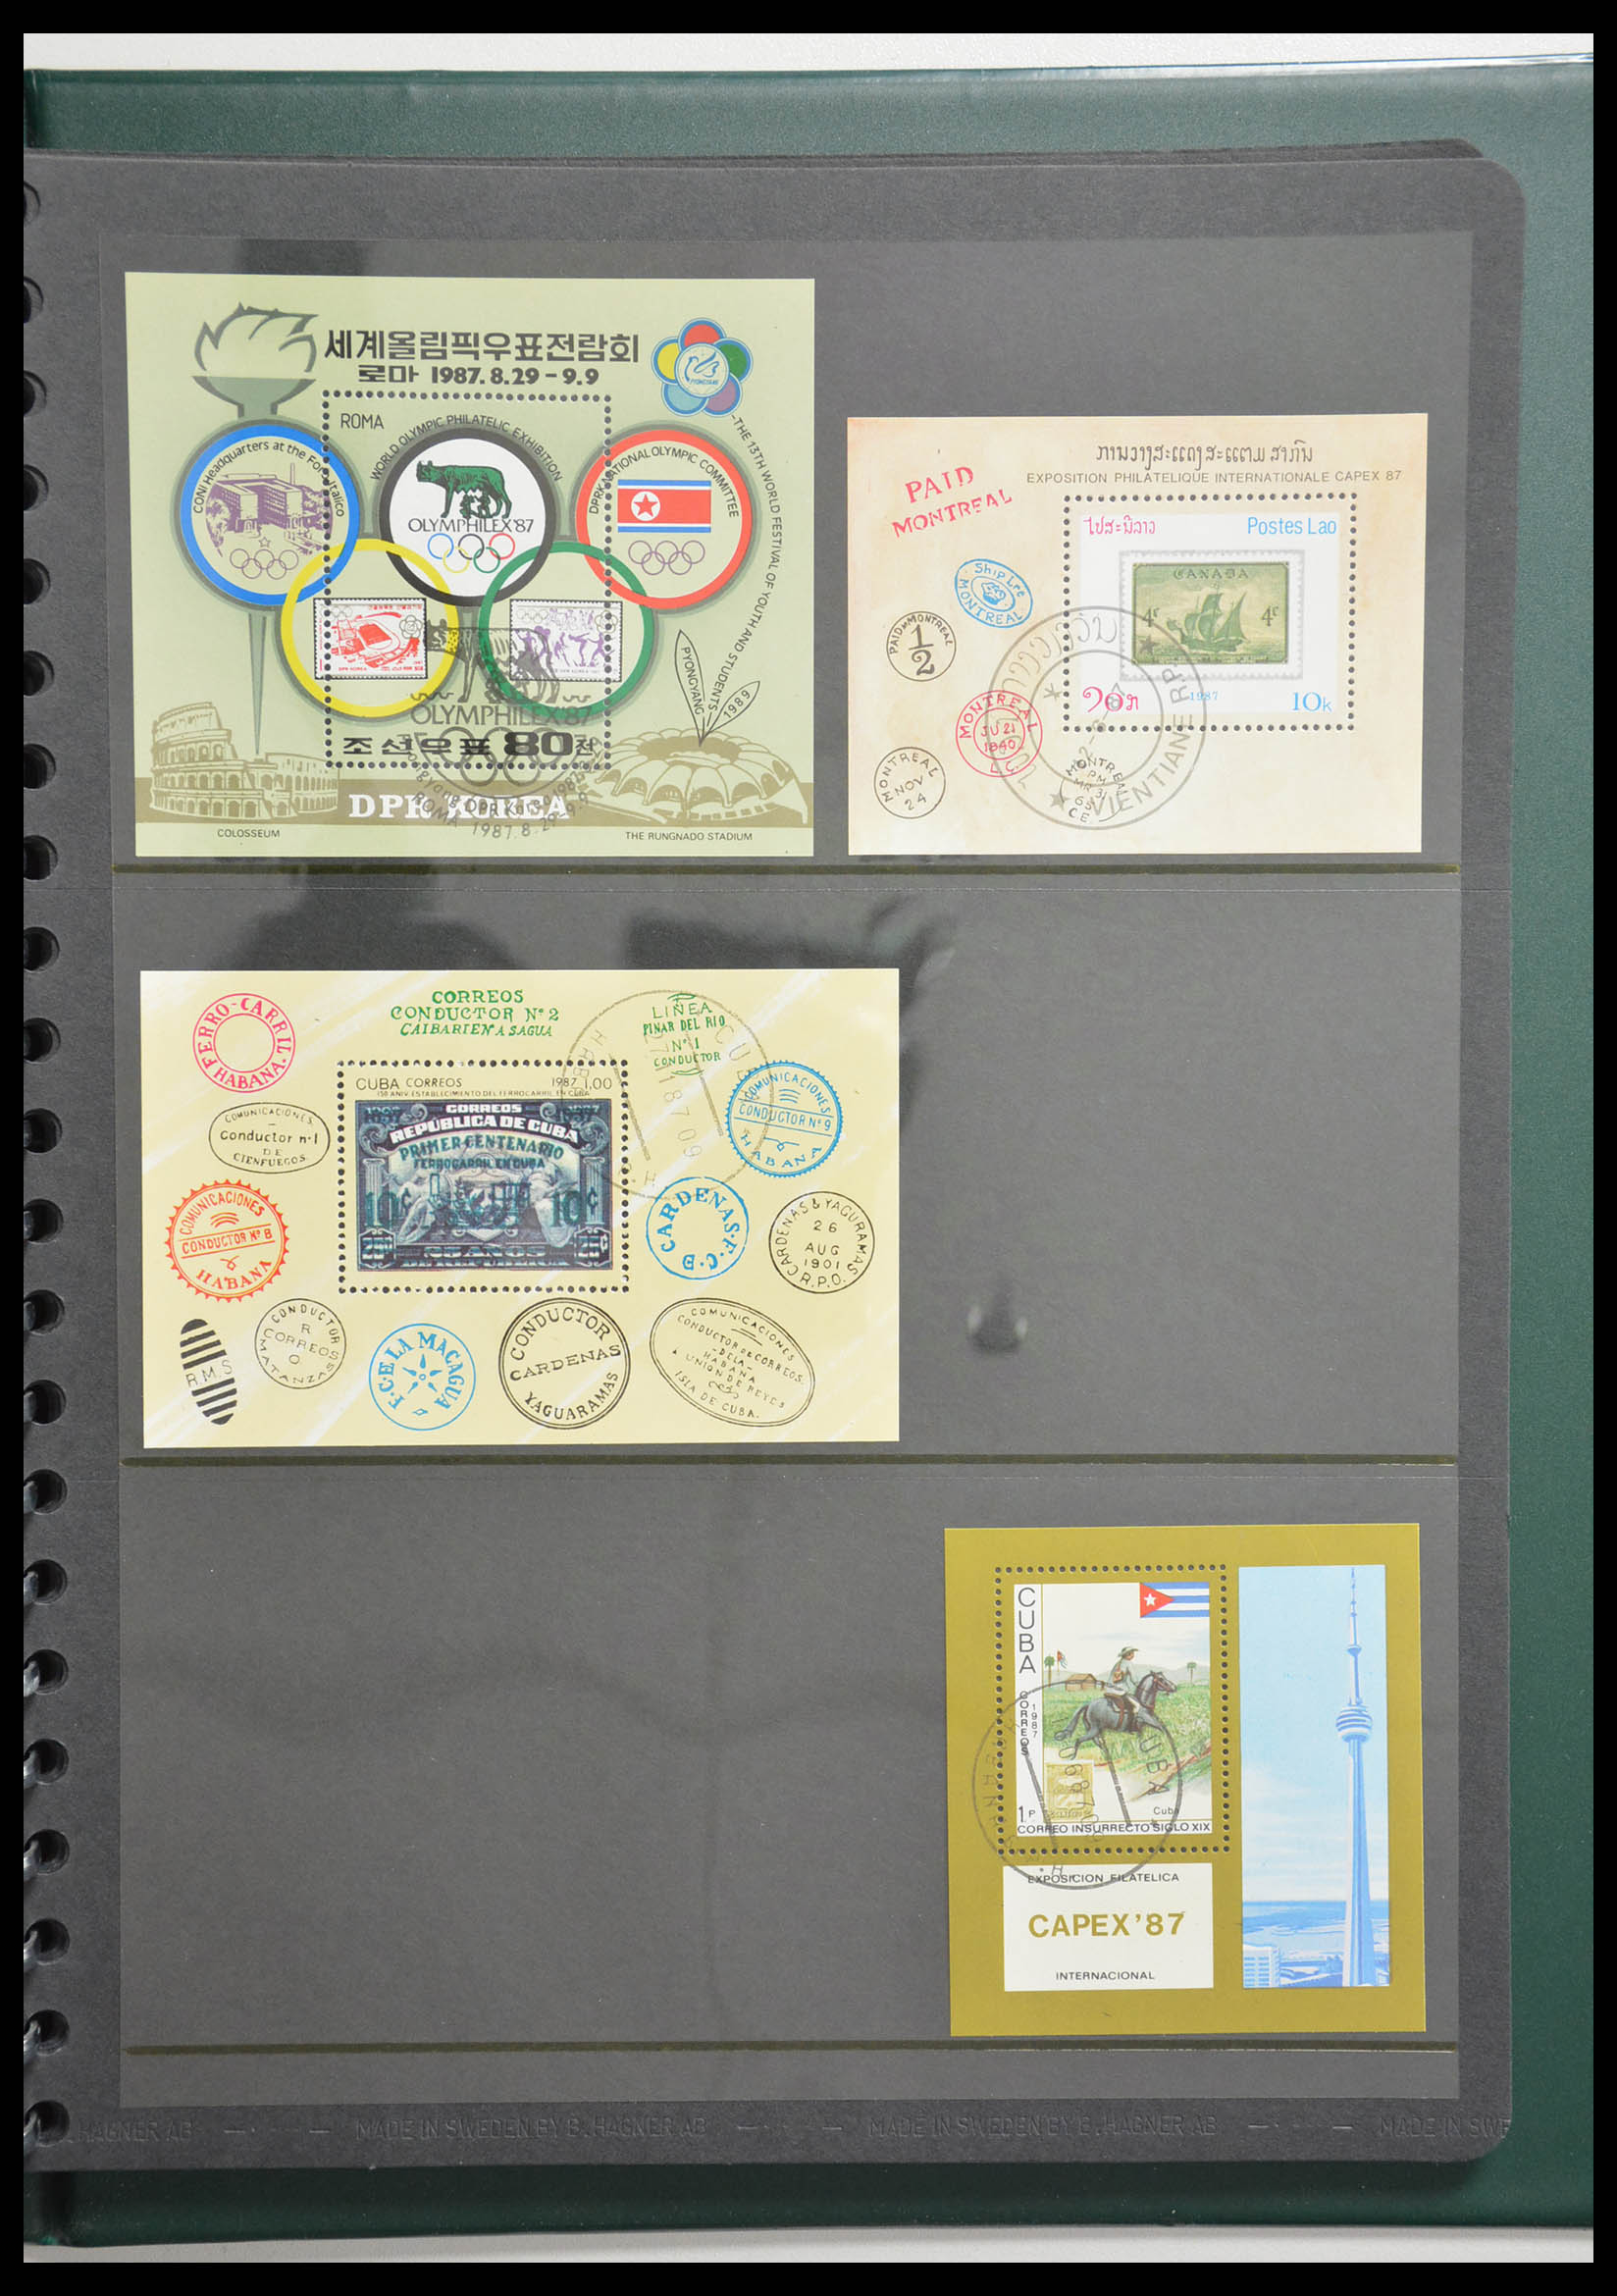 28337 081 - 28337 Postzegel op postzegel 1840-2001.